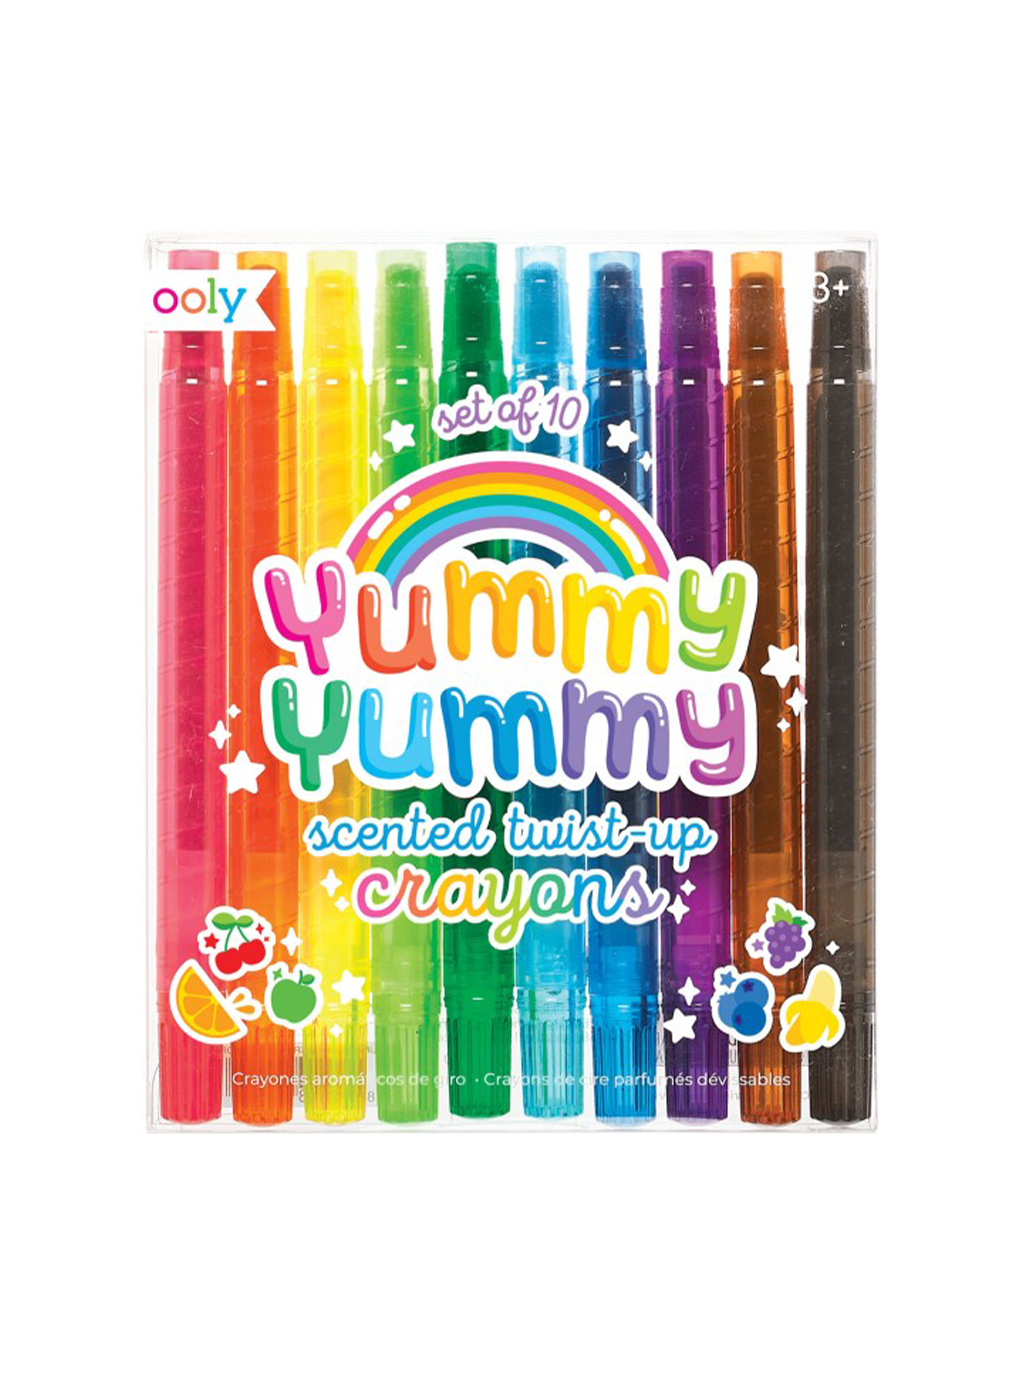 Crayons de cire parfumés Yummy Yummy